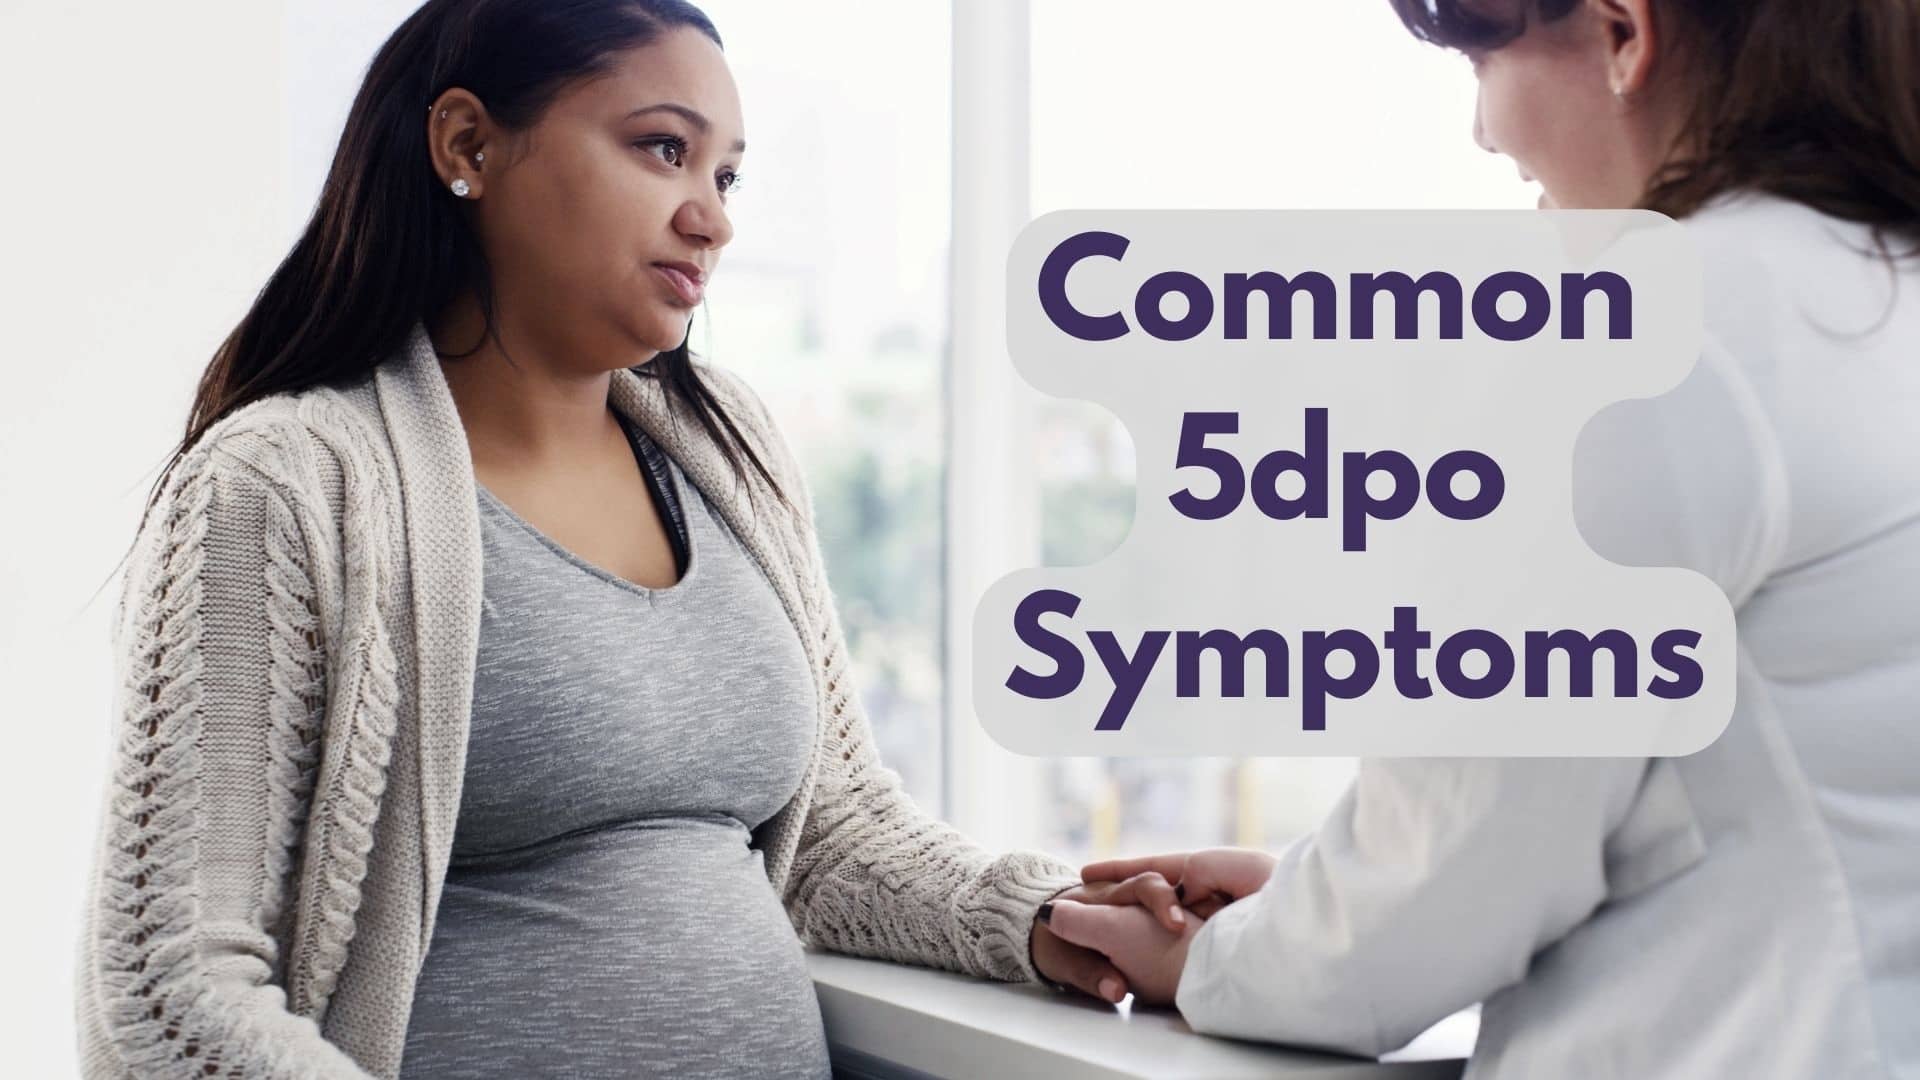 What Are The Common 5dpo Symptoms?